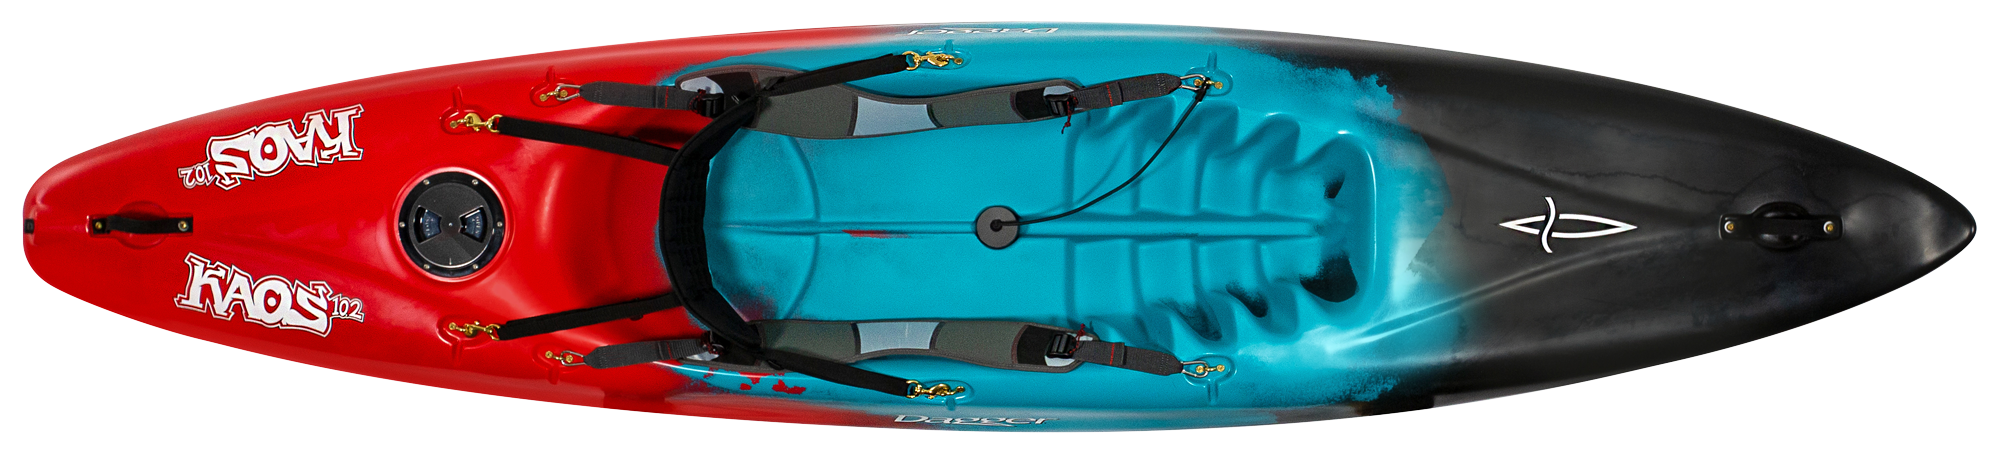 Kaos Surf Kayak - interactive Boat Layer